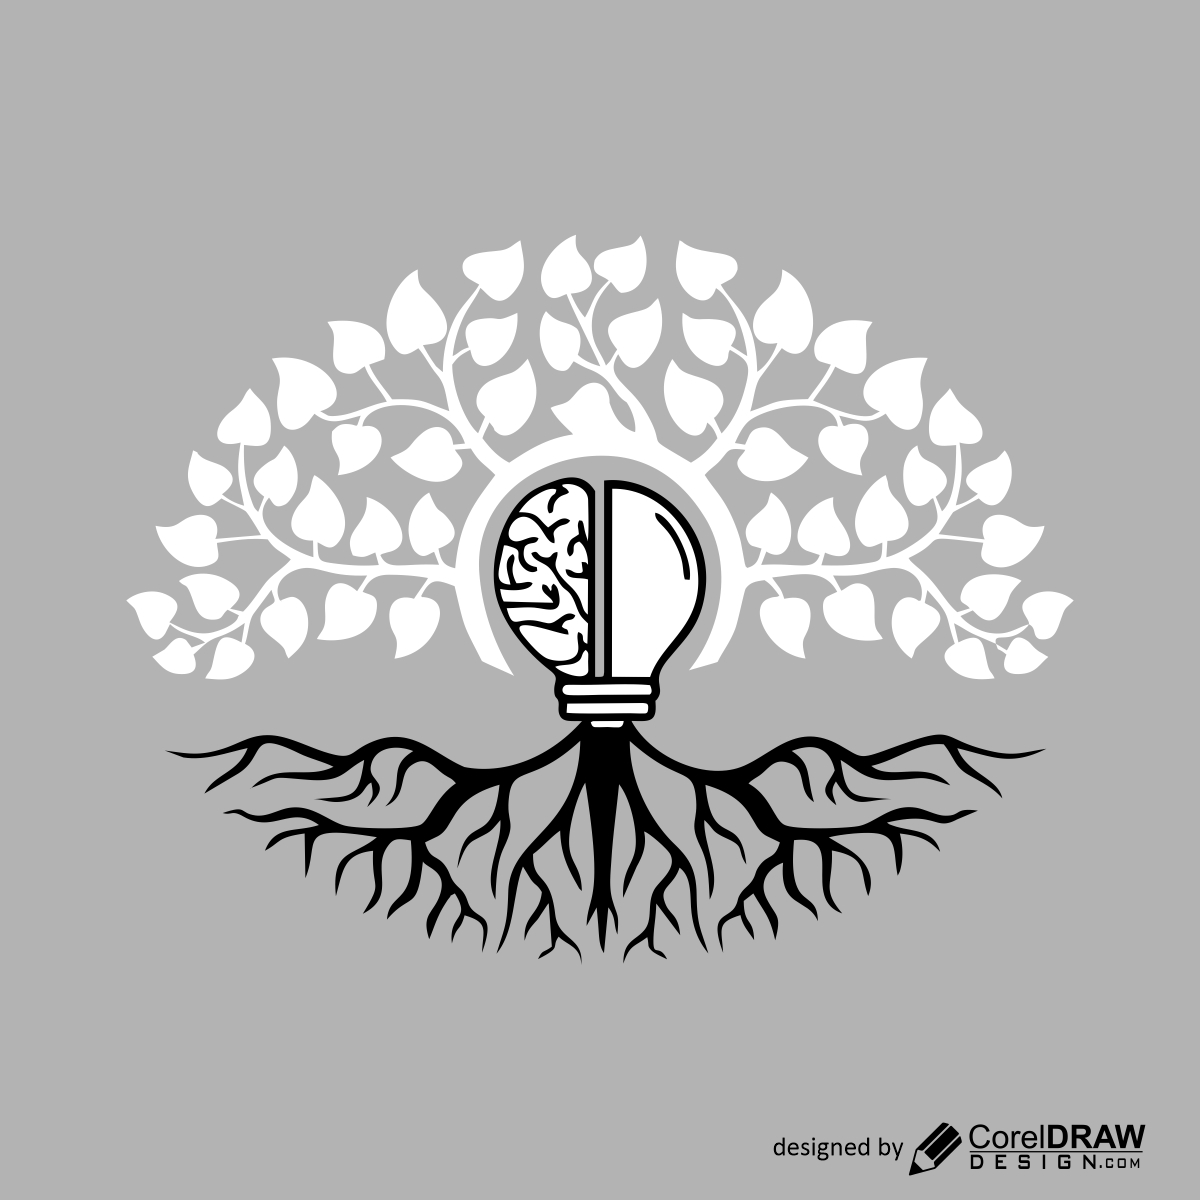 Brain tree logo vector design download for free